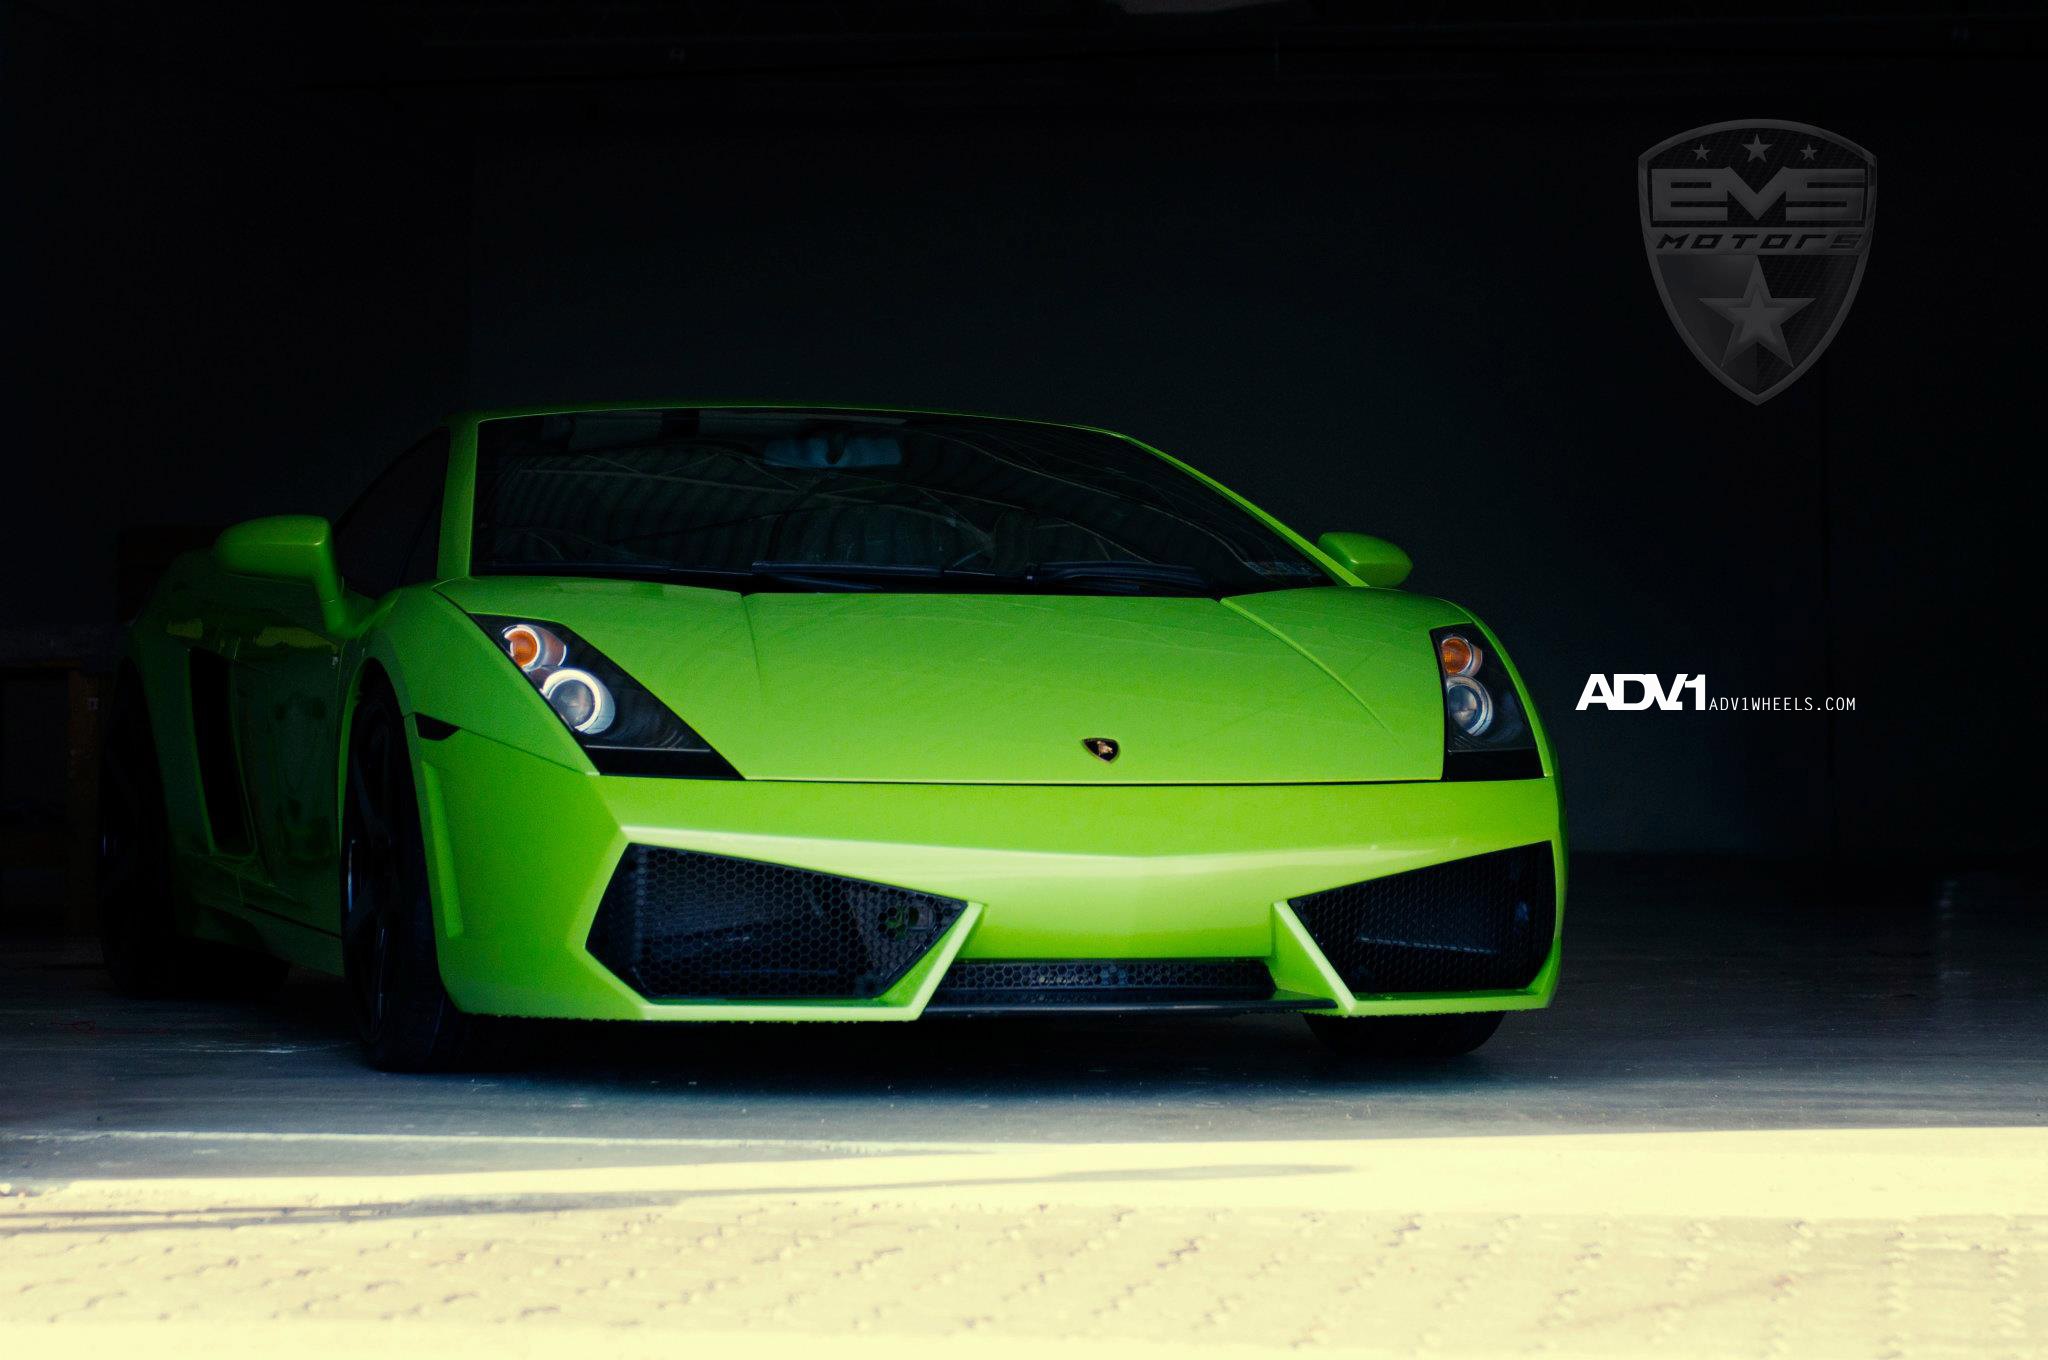 Green Lamborghini Gallardo with Halo Headlights - Photo by ADV.1